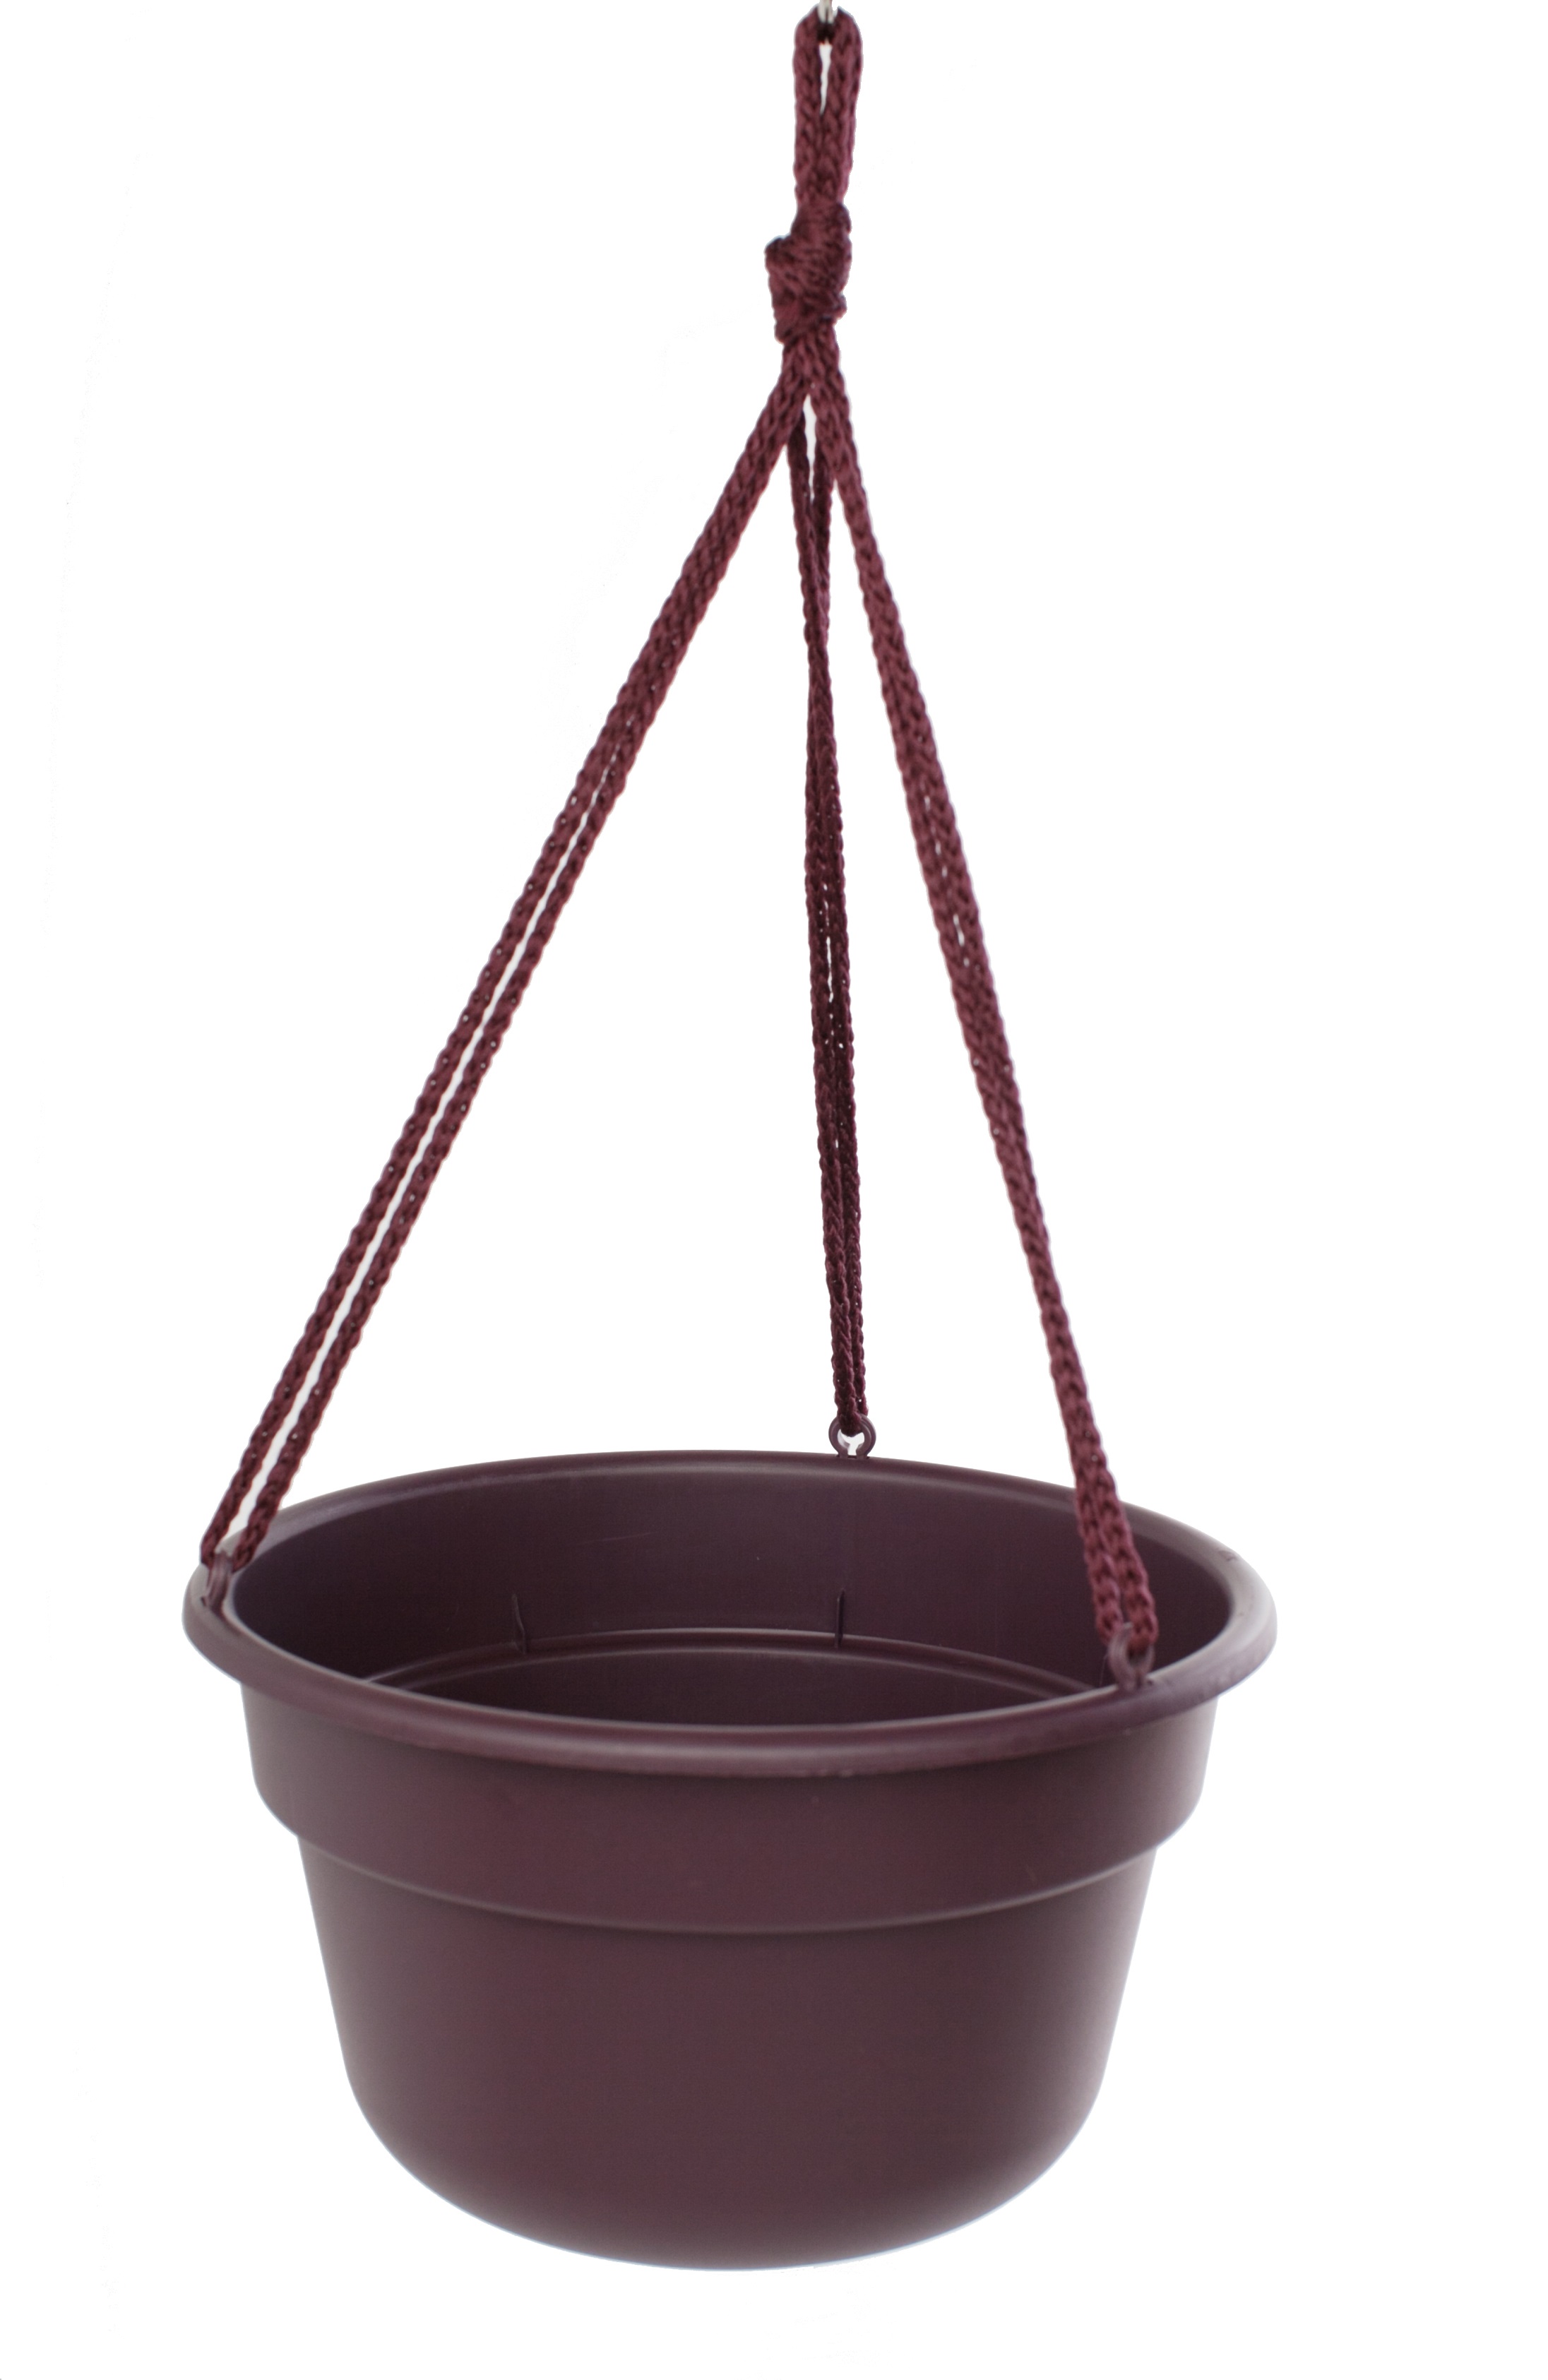 Bloem Dura Cotta Self Watering Hanging Basket Planter 10" Exotica - image 1 of 2